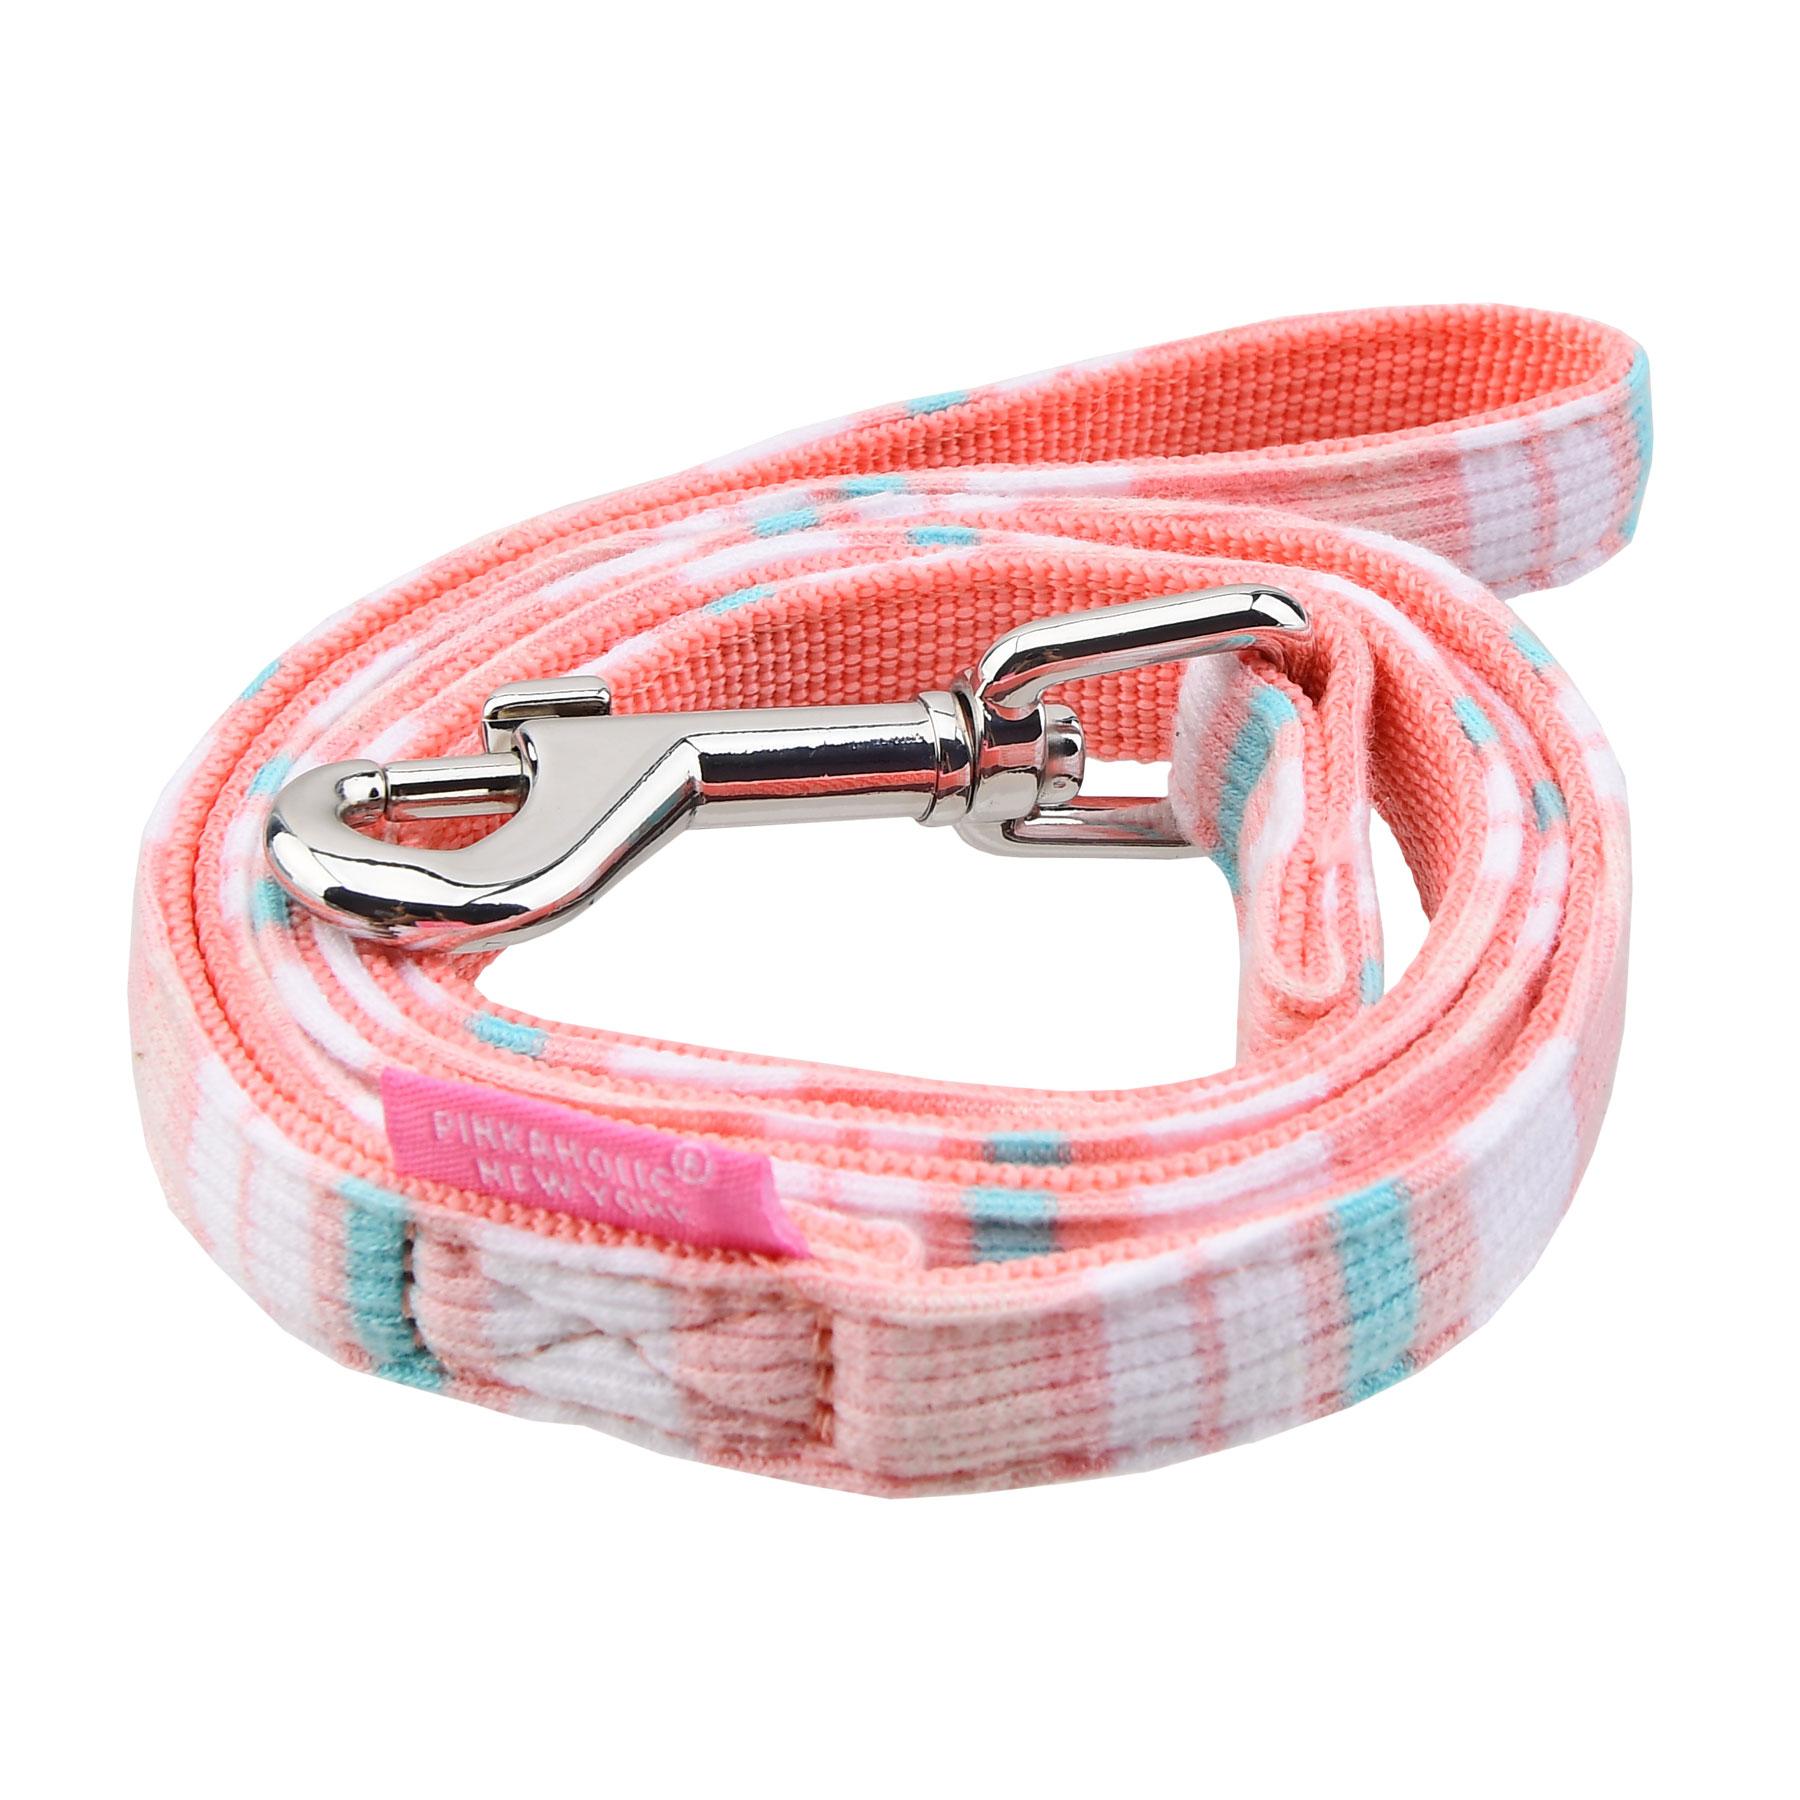 Cara Dog Leash by Pinkaholic - Pink